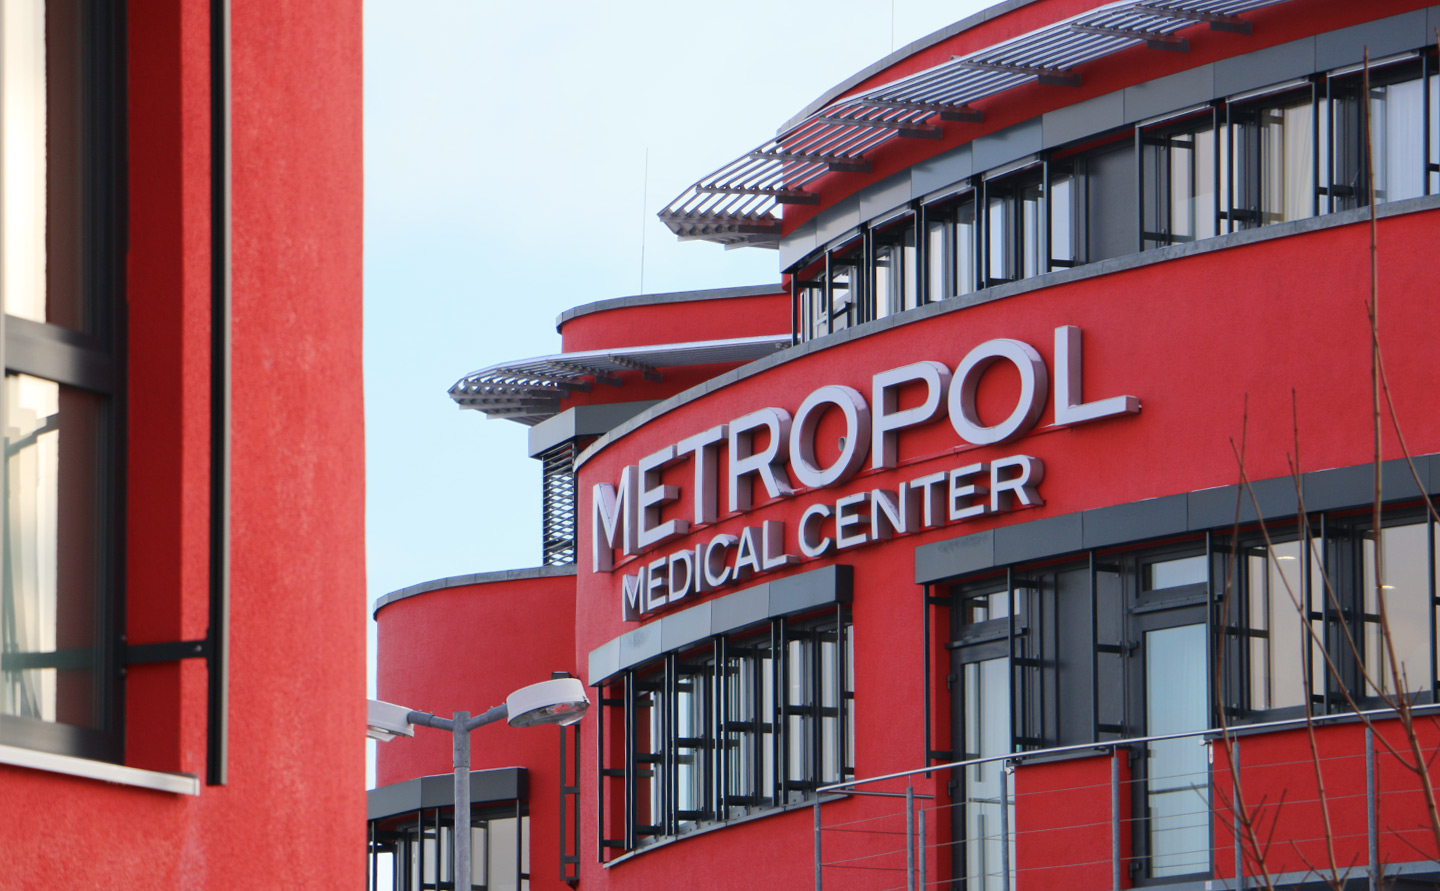 Metropol Medical Center Nürnberg